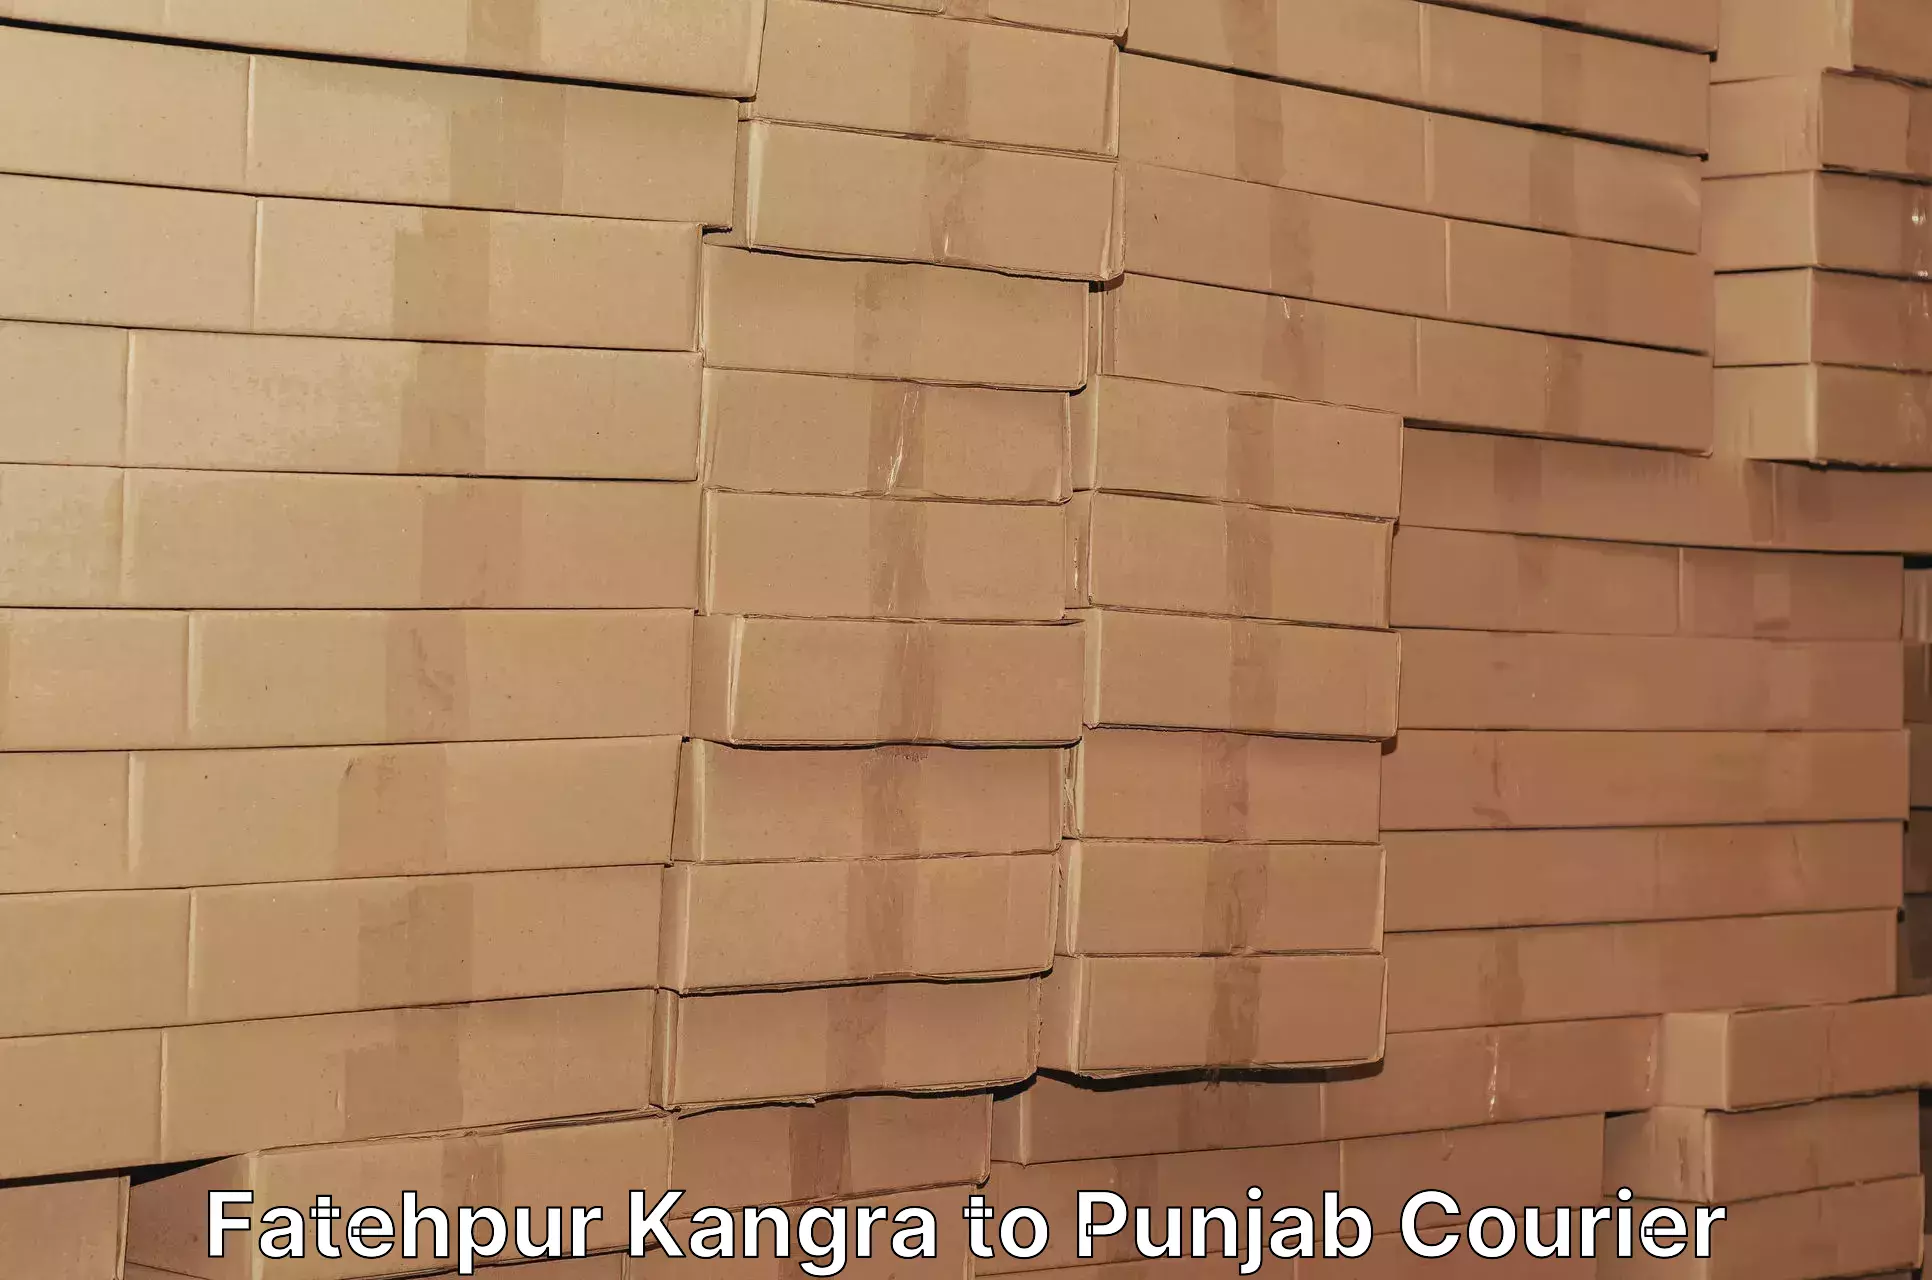 Courier service comparison Fatehpur Kangra to Firozpur